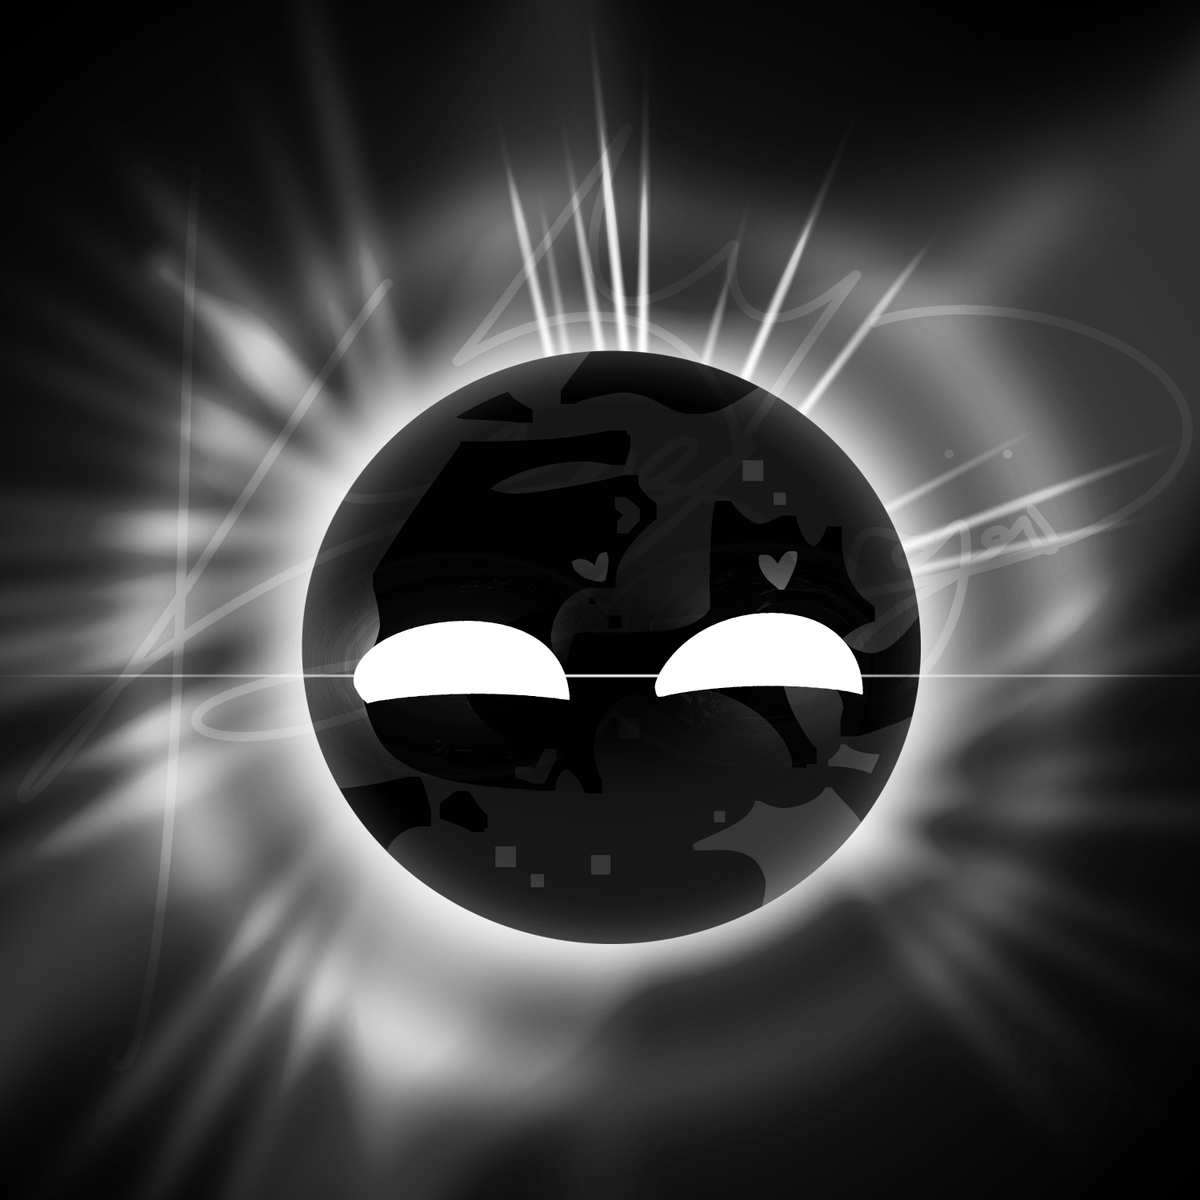 old solar eclipse art i never finished
#solarballs